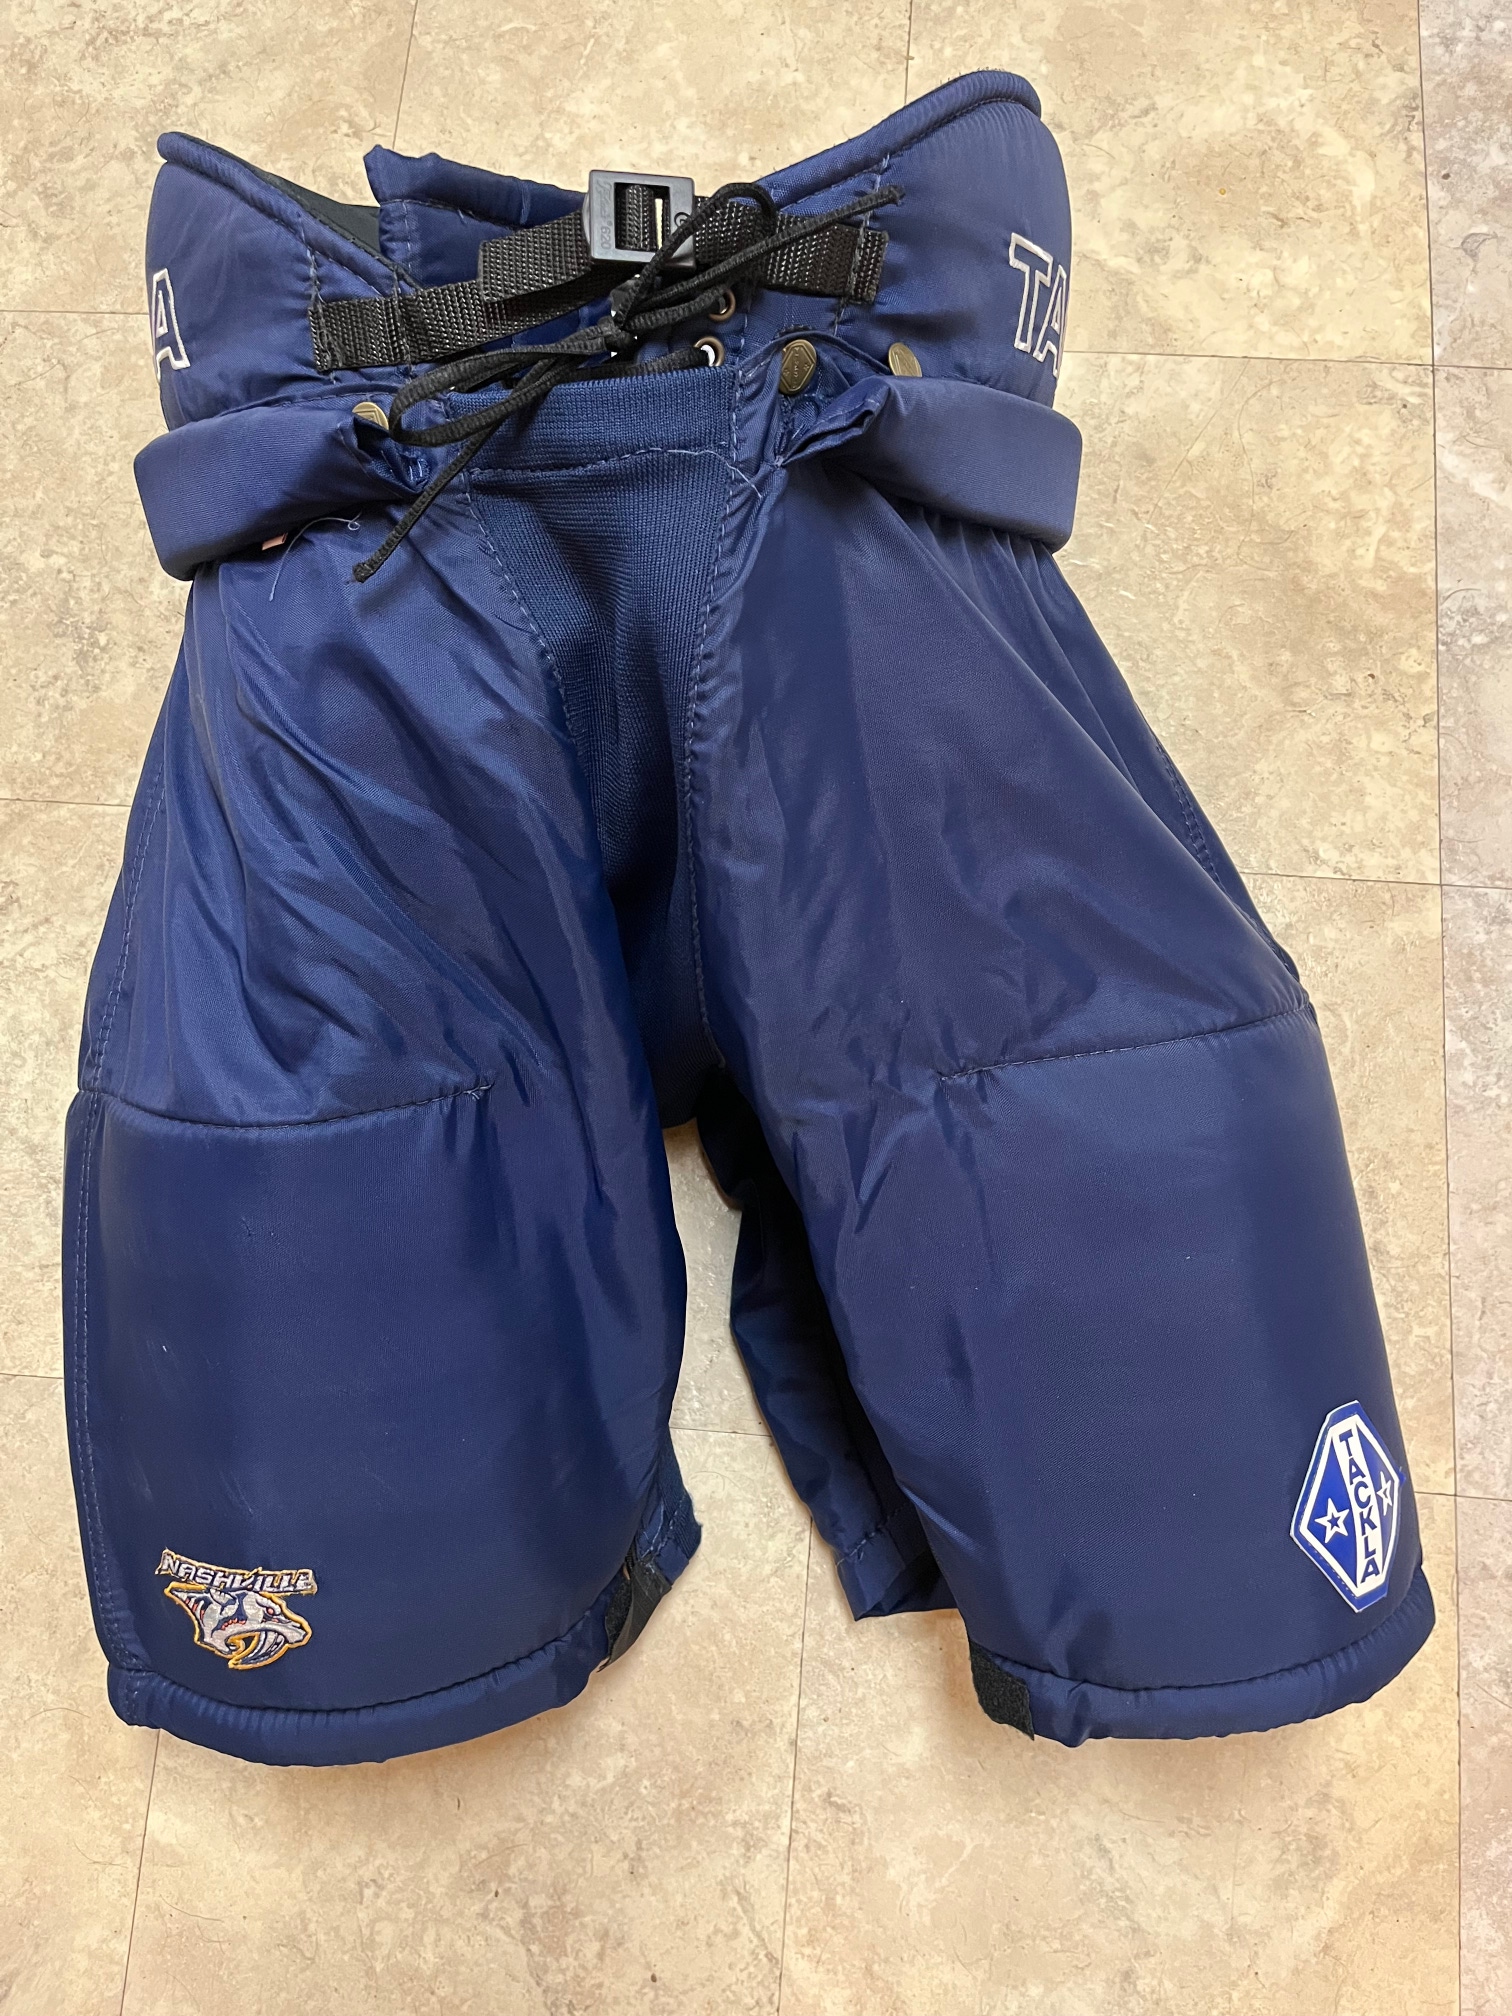 Tackla Pro Stock Nashville Predators Pants, size 54 (XL) used.